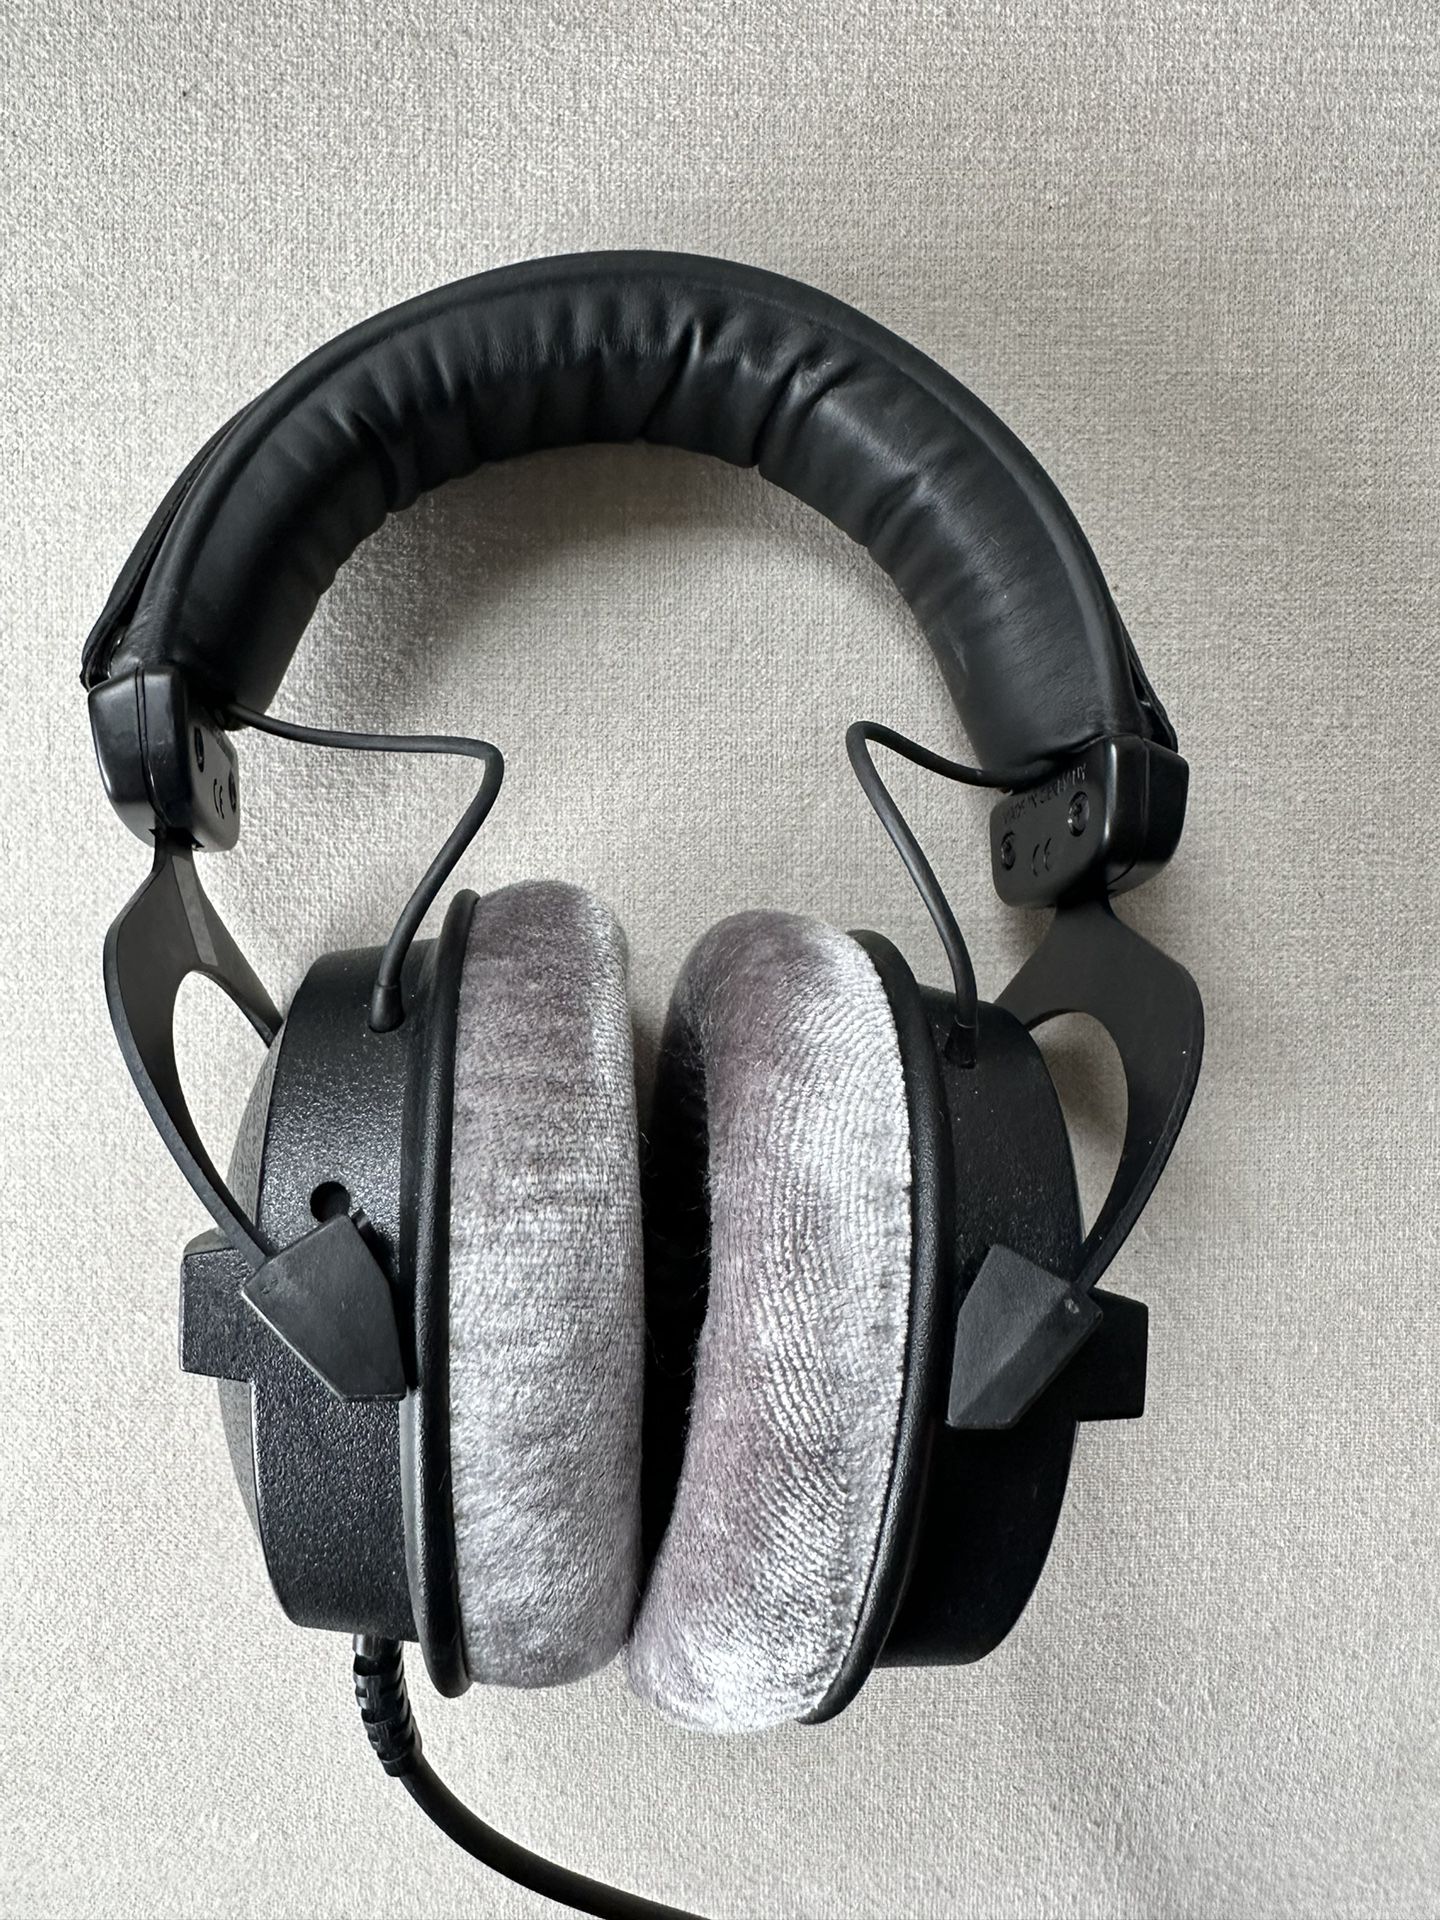 beyerdynamic DT 770 Pro 250 ohm Professional Studio Headphones